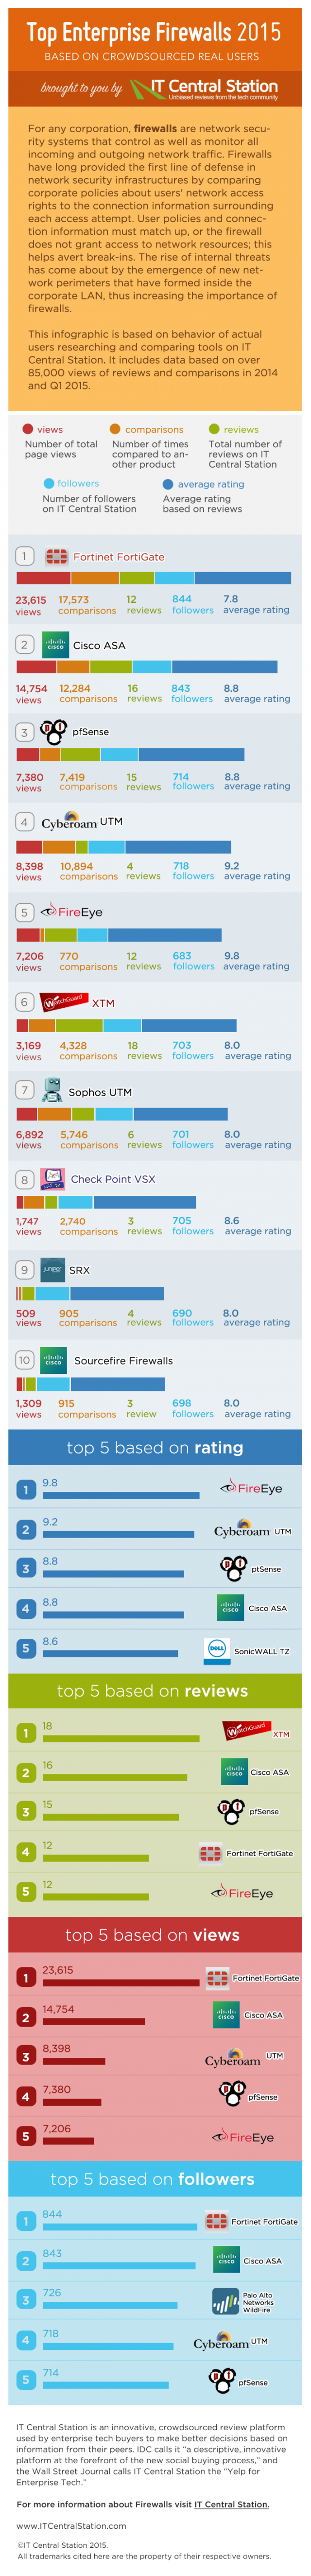 Top enterprise firewalls of 2015